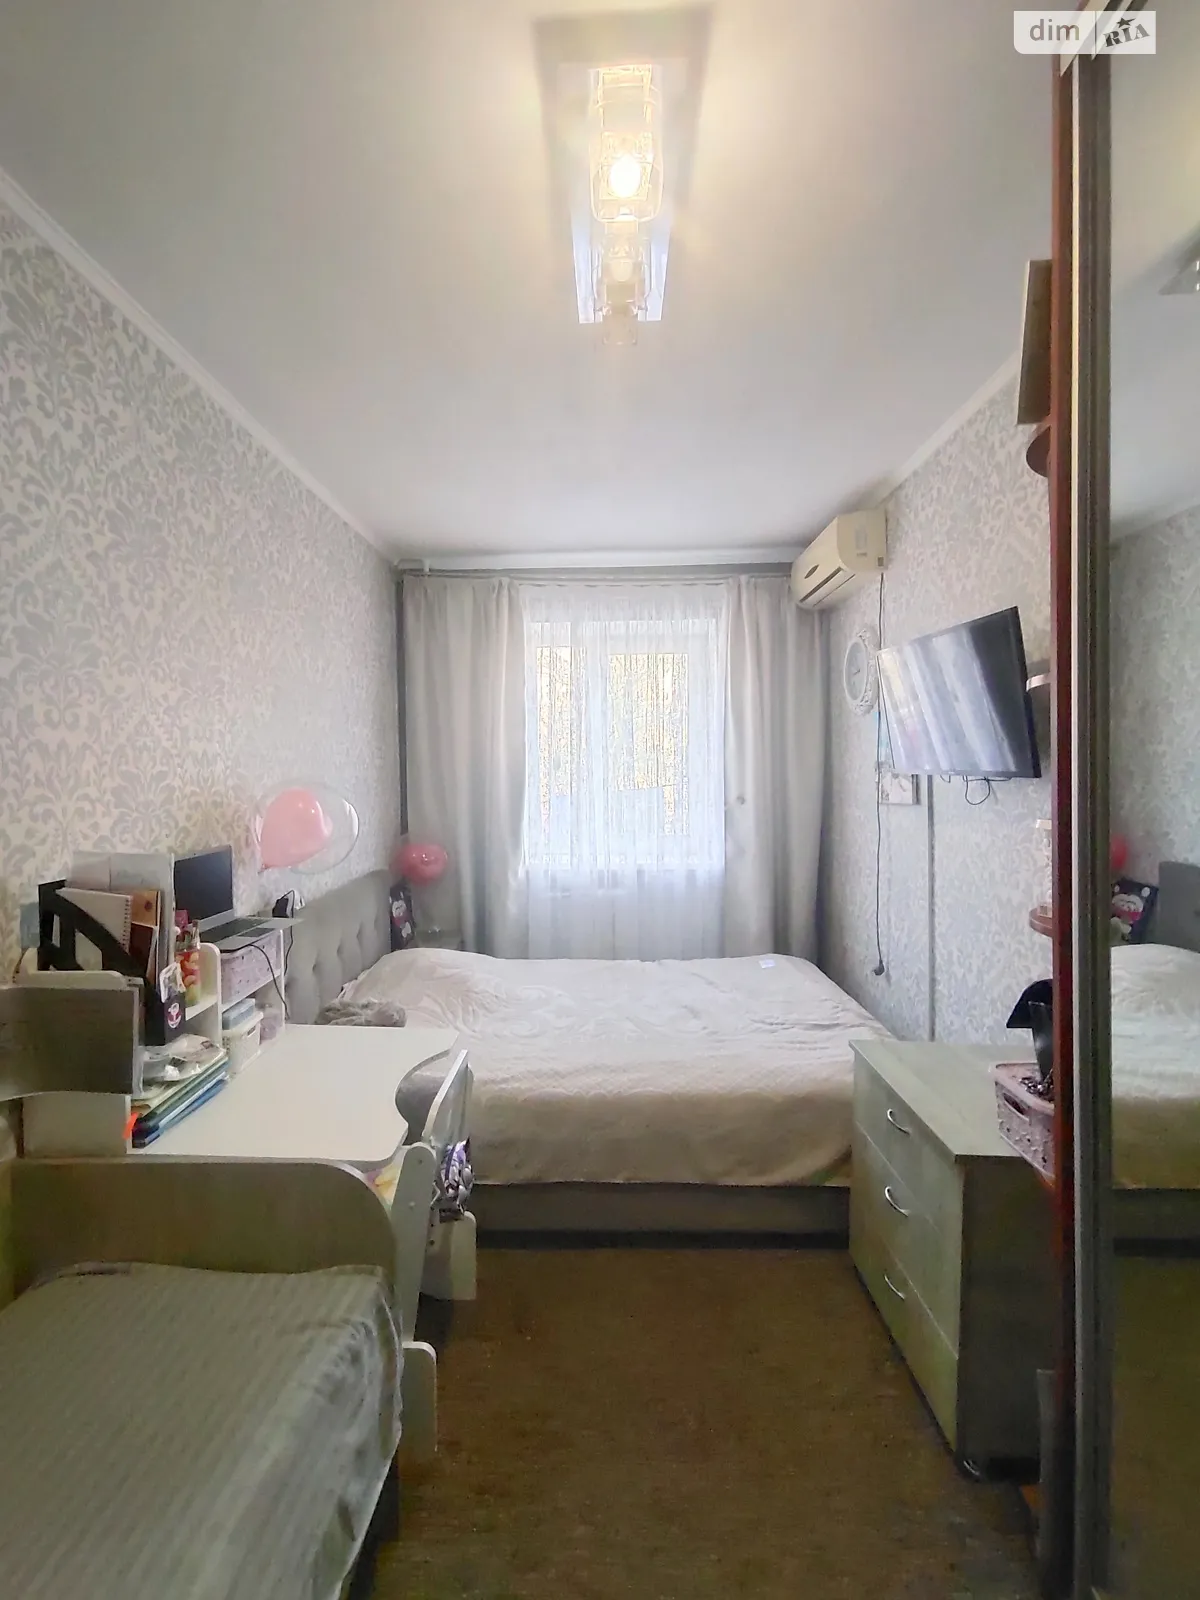 Продается комната 25 кв. м в Одессе, цена: 9800 $ - фото 1